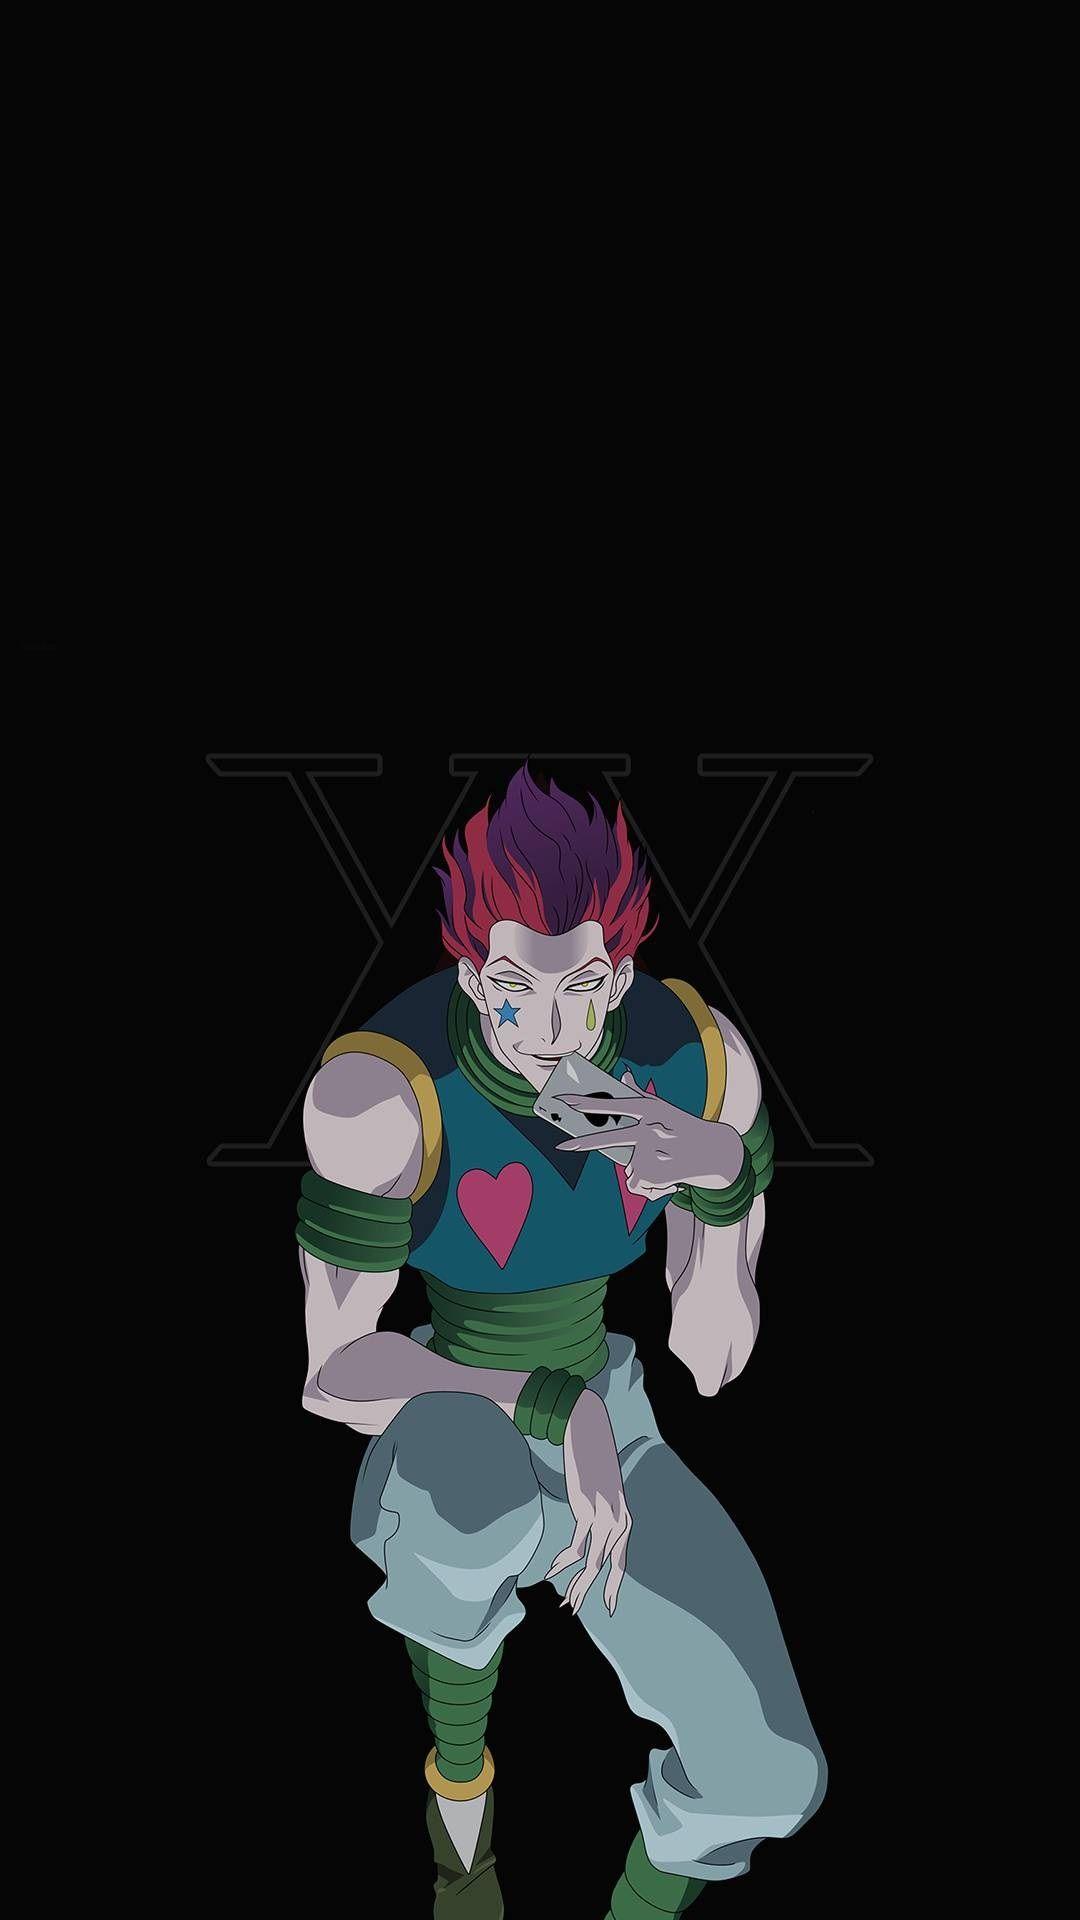 Featured image of post Kurapika Wallpaper Aesthetic Main character from hunter x hunter